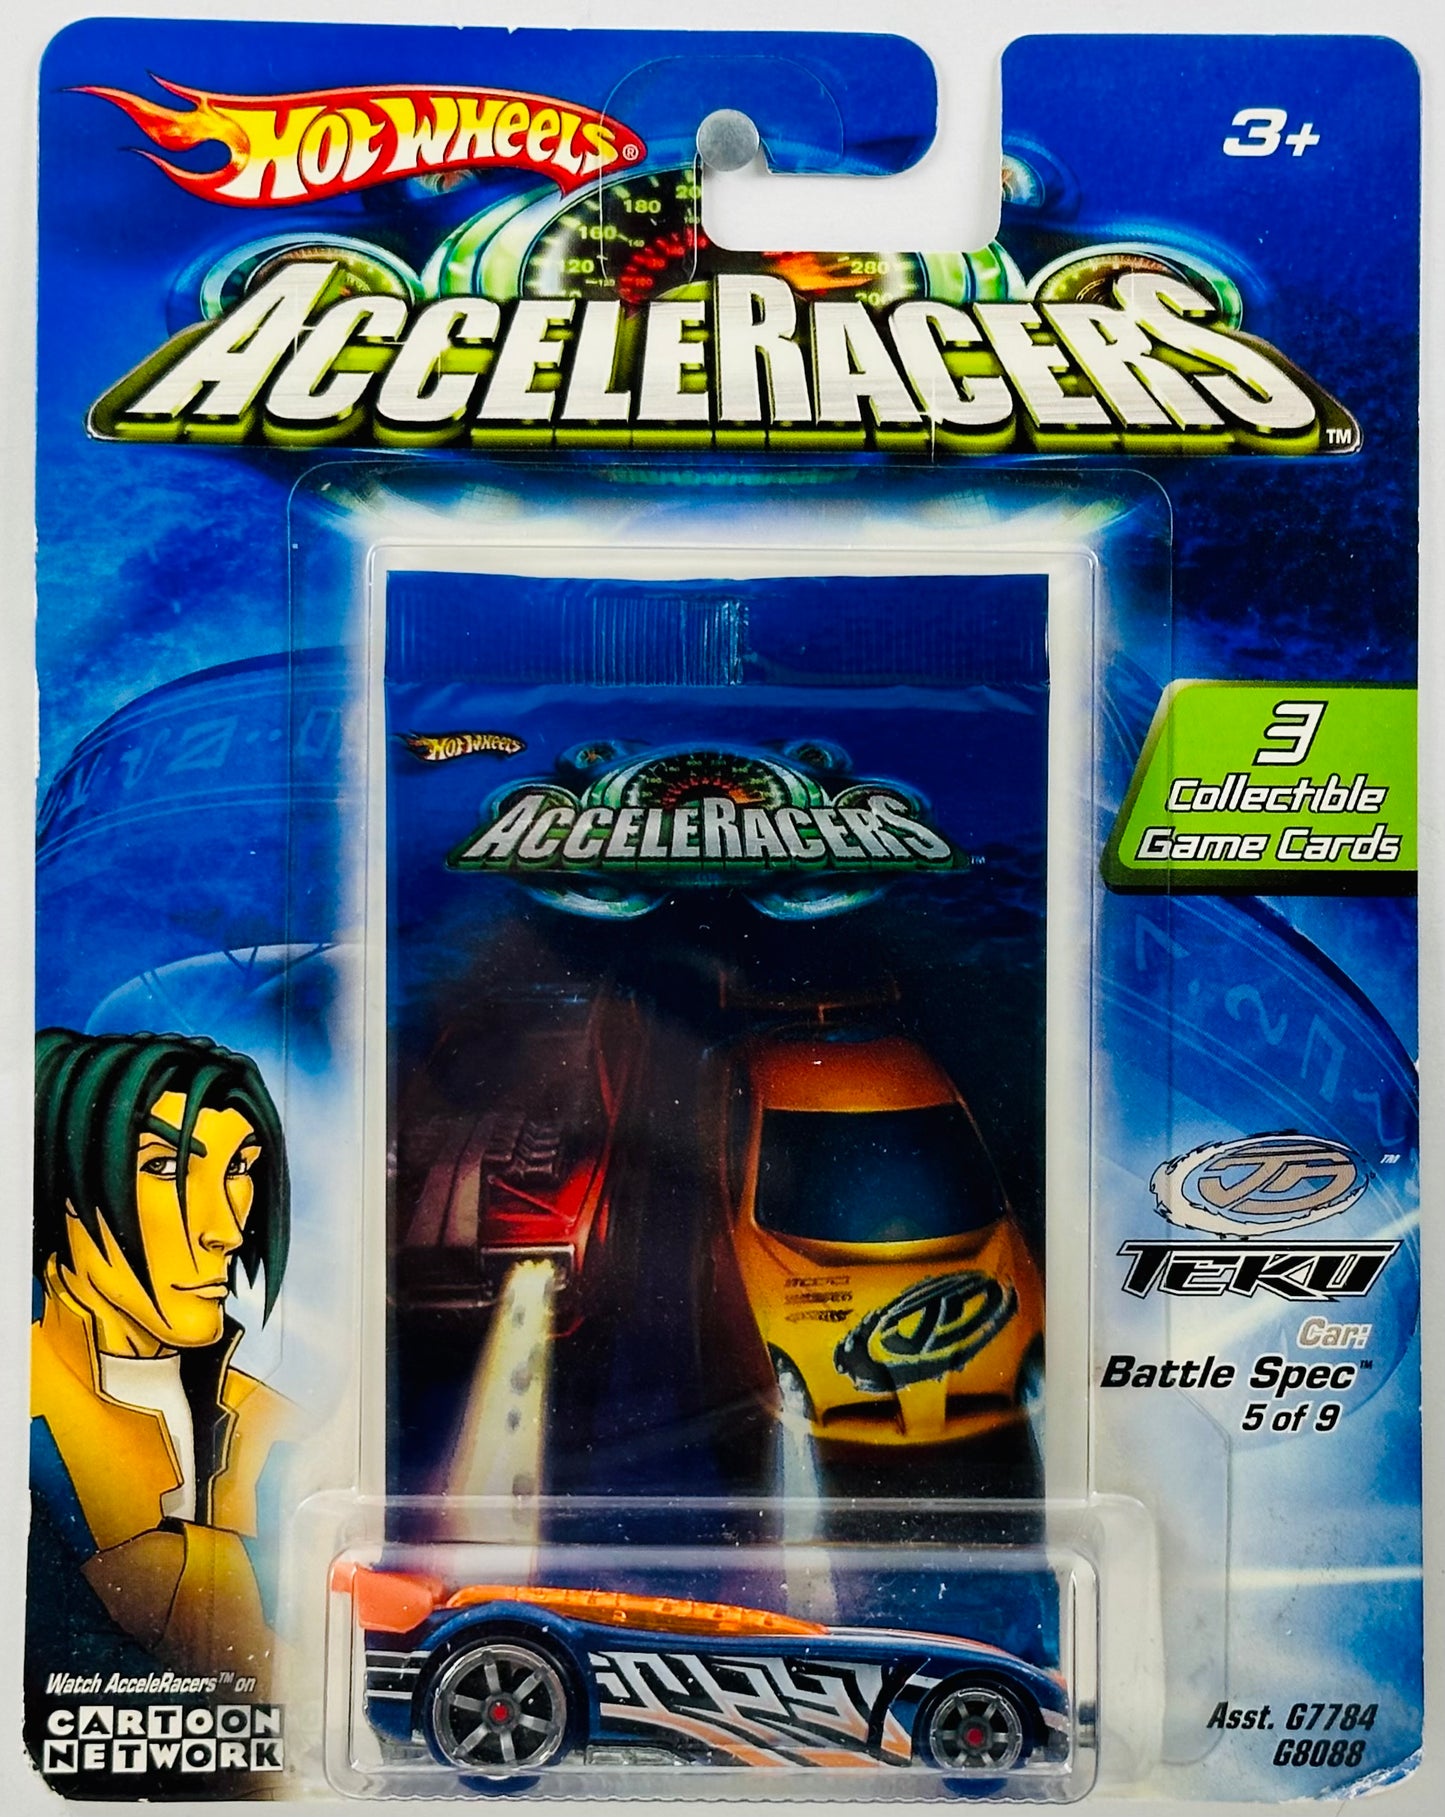 Hot Wheels 2005 - AcceleRacers: Teku 05/09 - Battle Spec - Metallic Blue - Cartoon Network - Large Blister Card